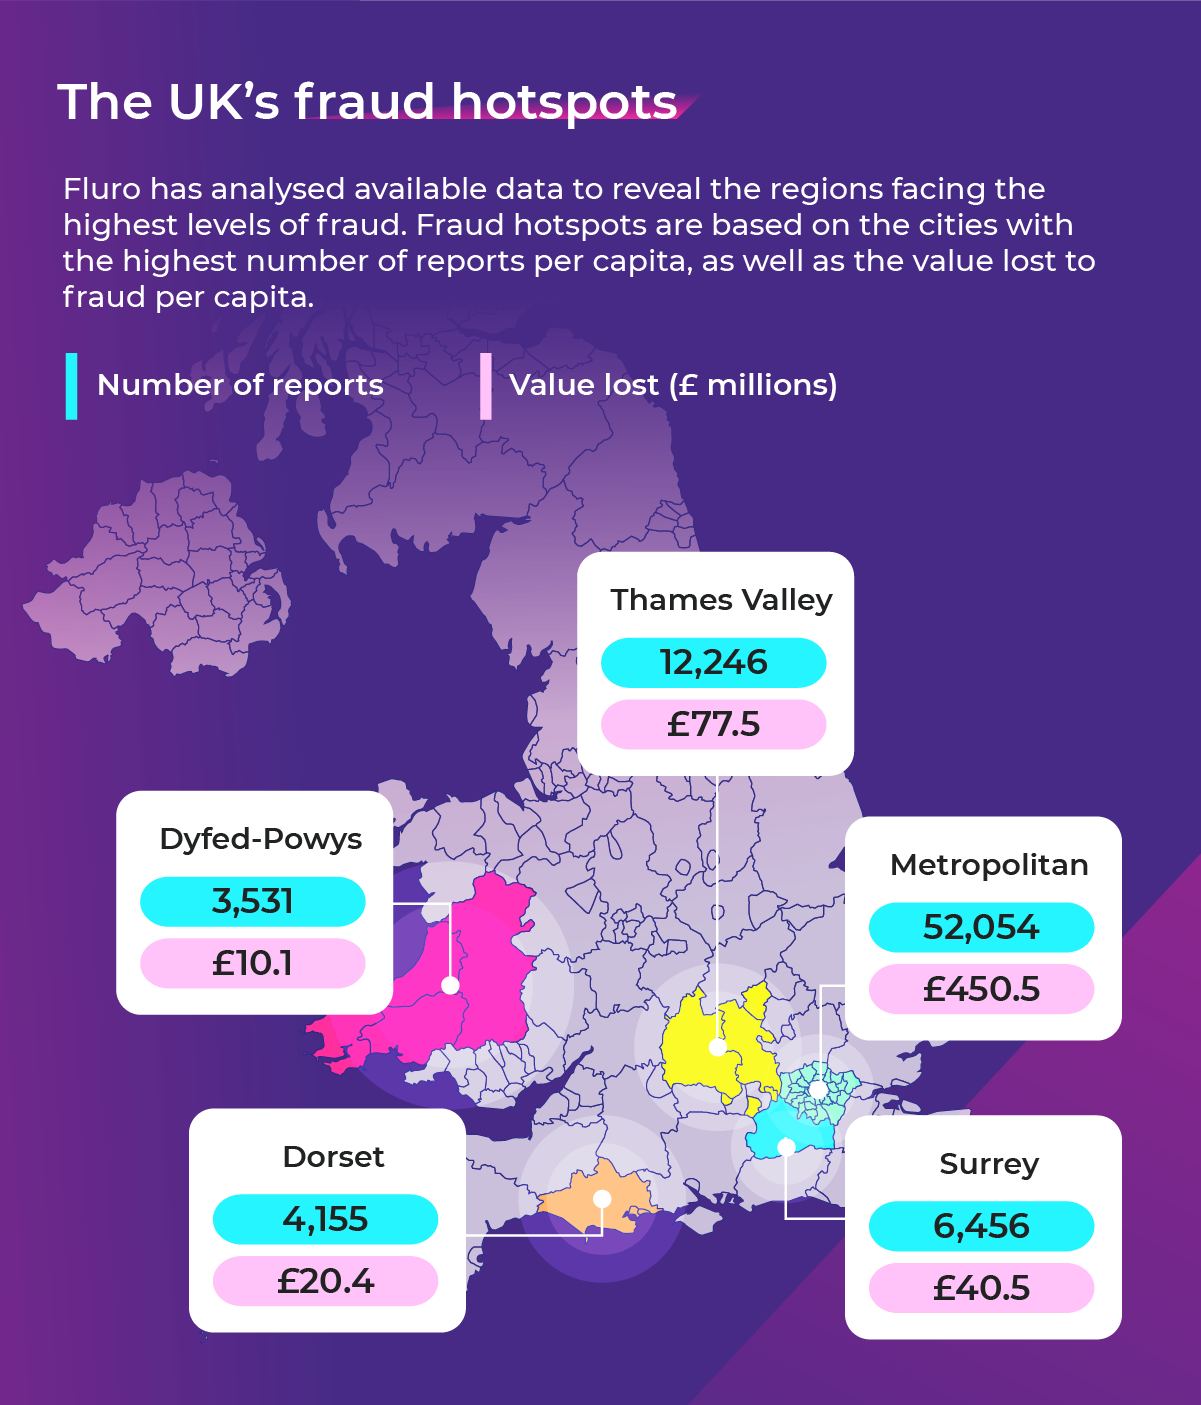 The UK fraud hotspots